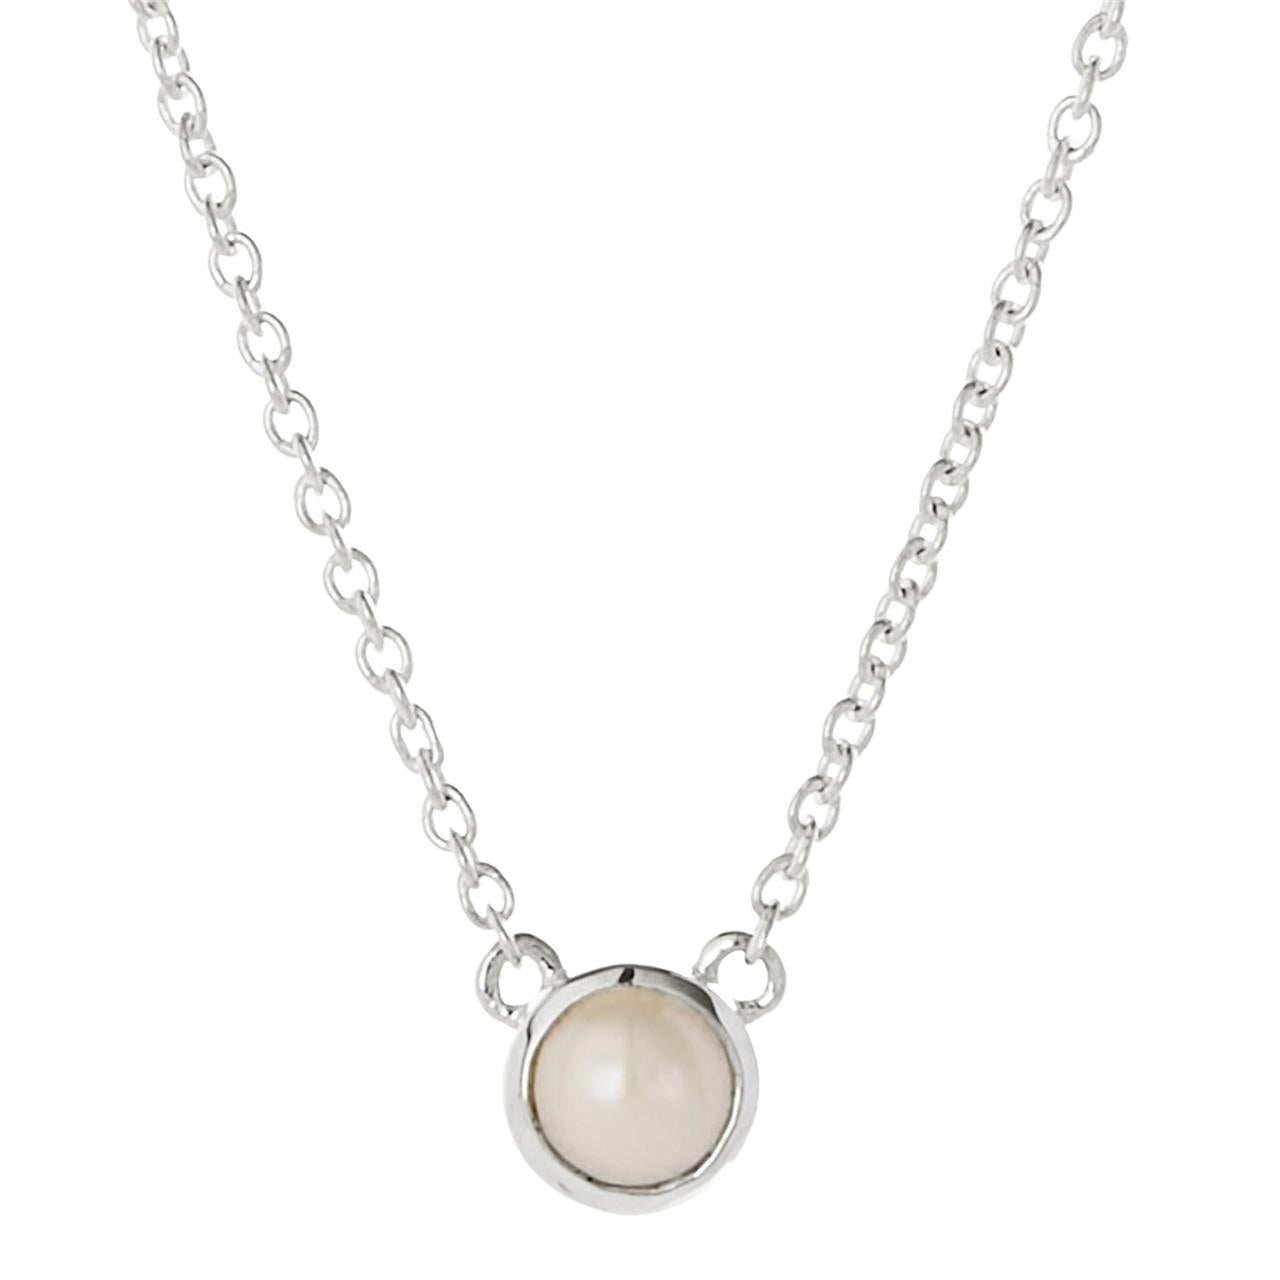 Najo - 5mm Silver Necklace